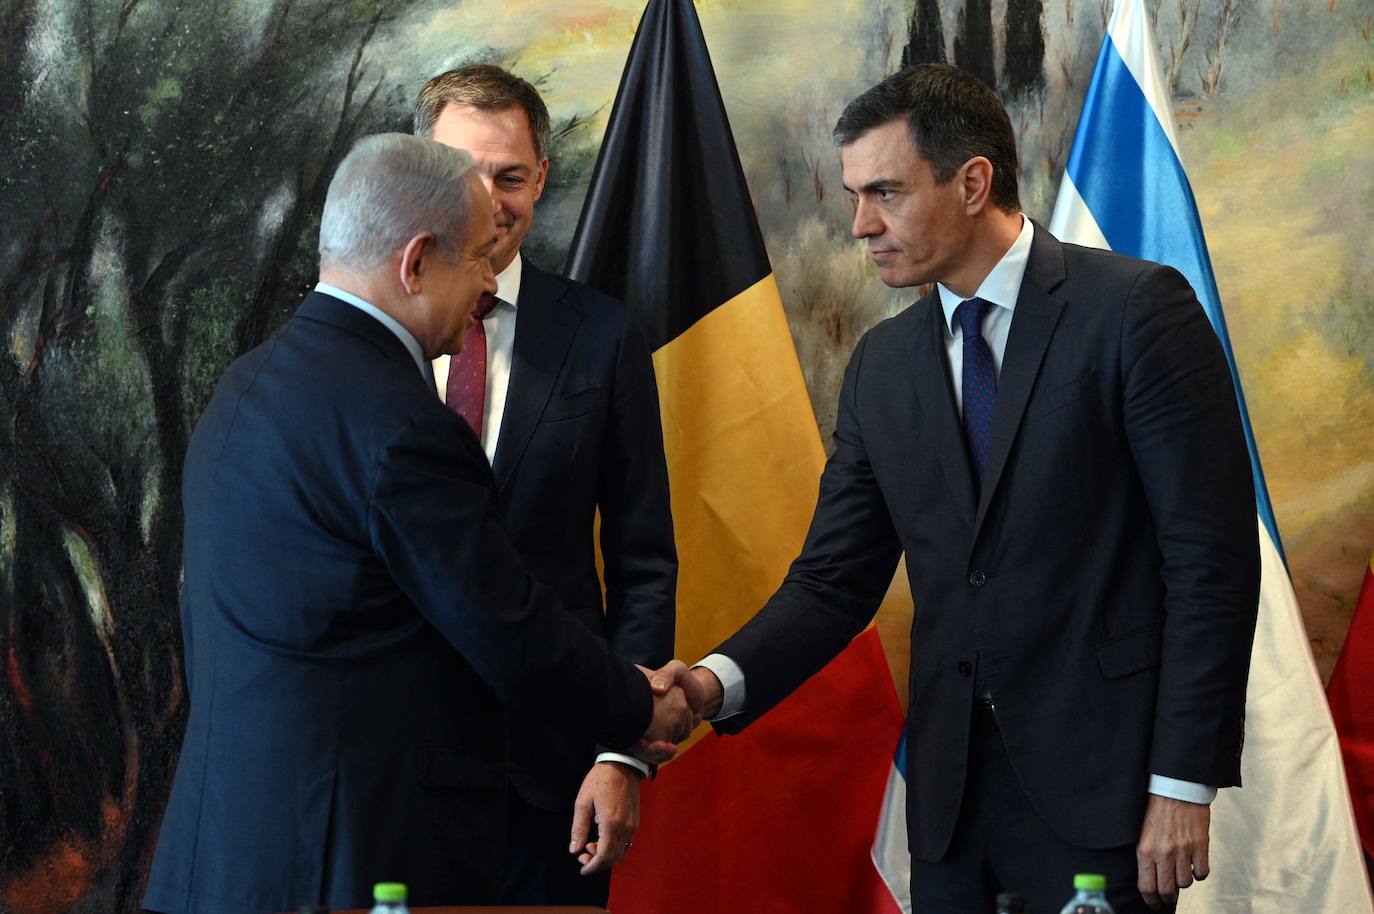 Israeli Prime Minister Benjamin Netanyahu (L) shakes hands with Spain's Prime Minister Pedro Sanchez (R) next to Belgium's Prime Minister Alexander De Croo.